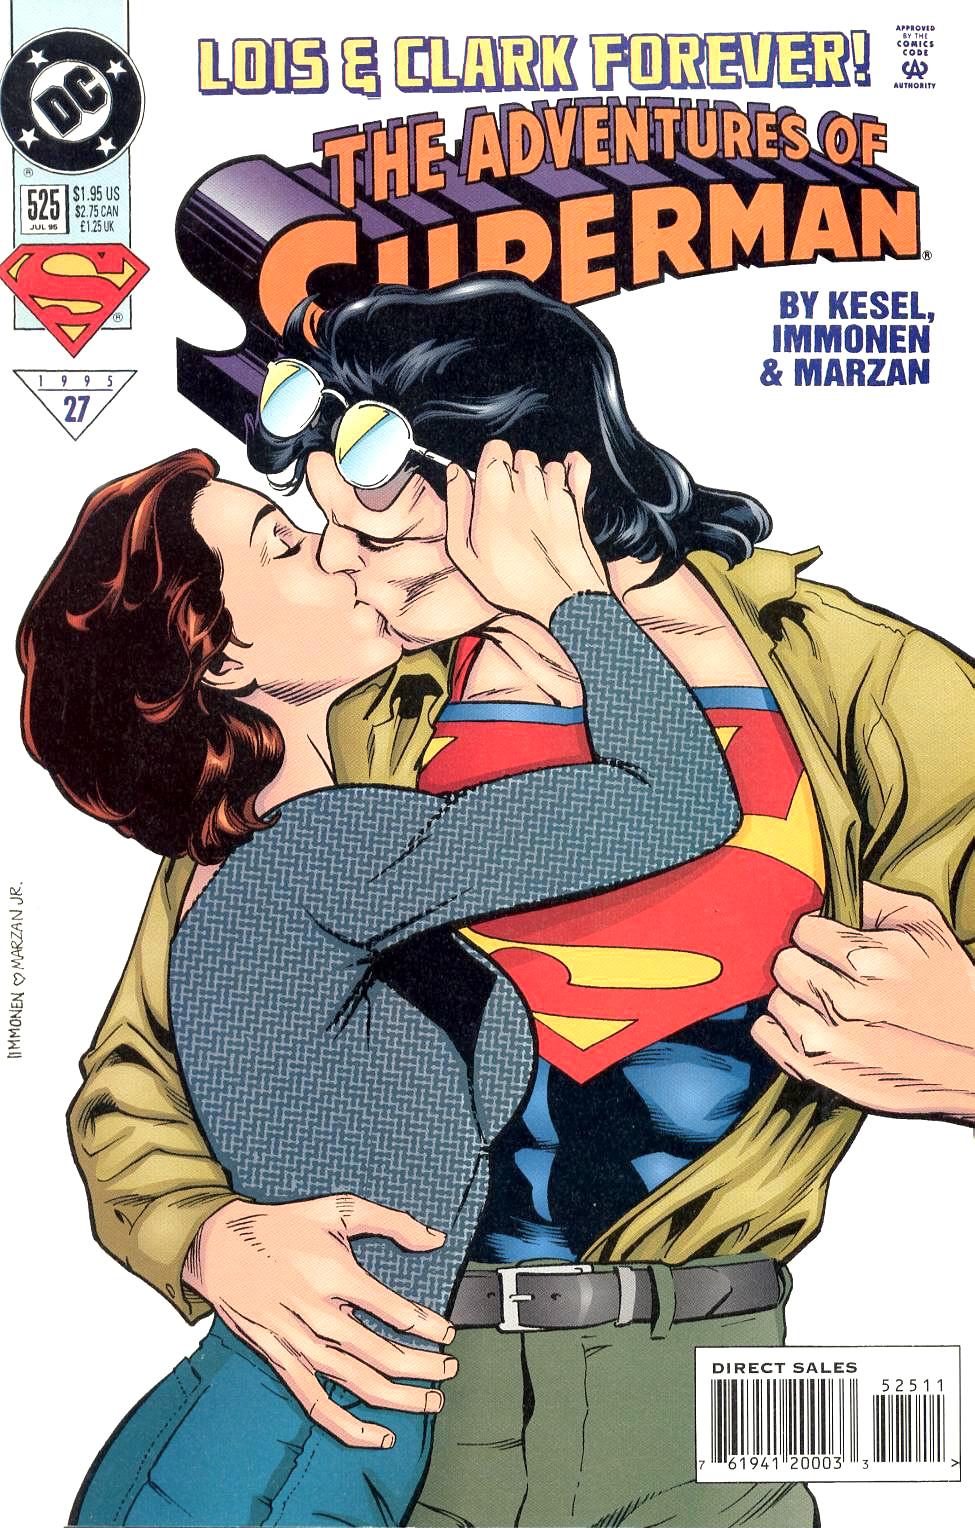 The Adventures of Superman Vol. 1 #525